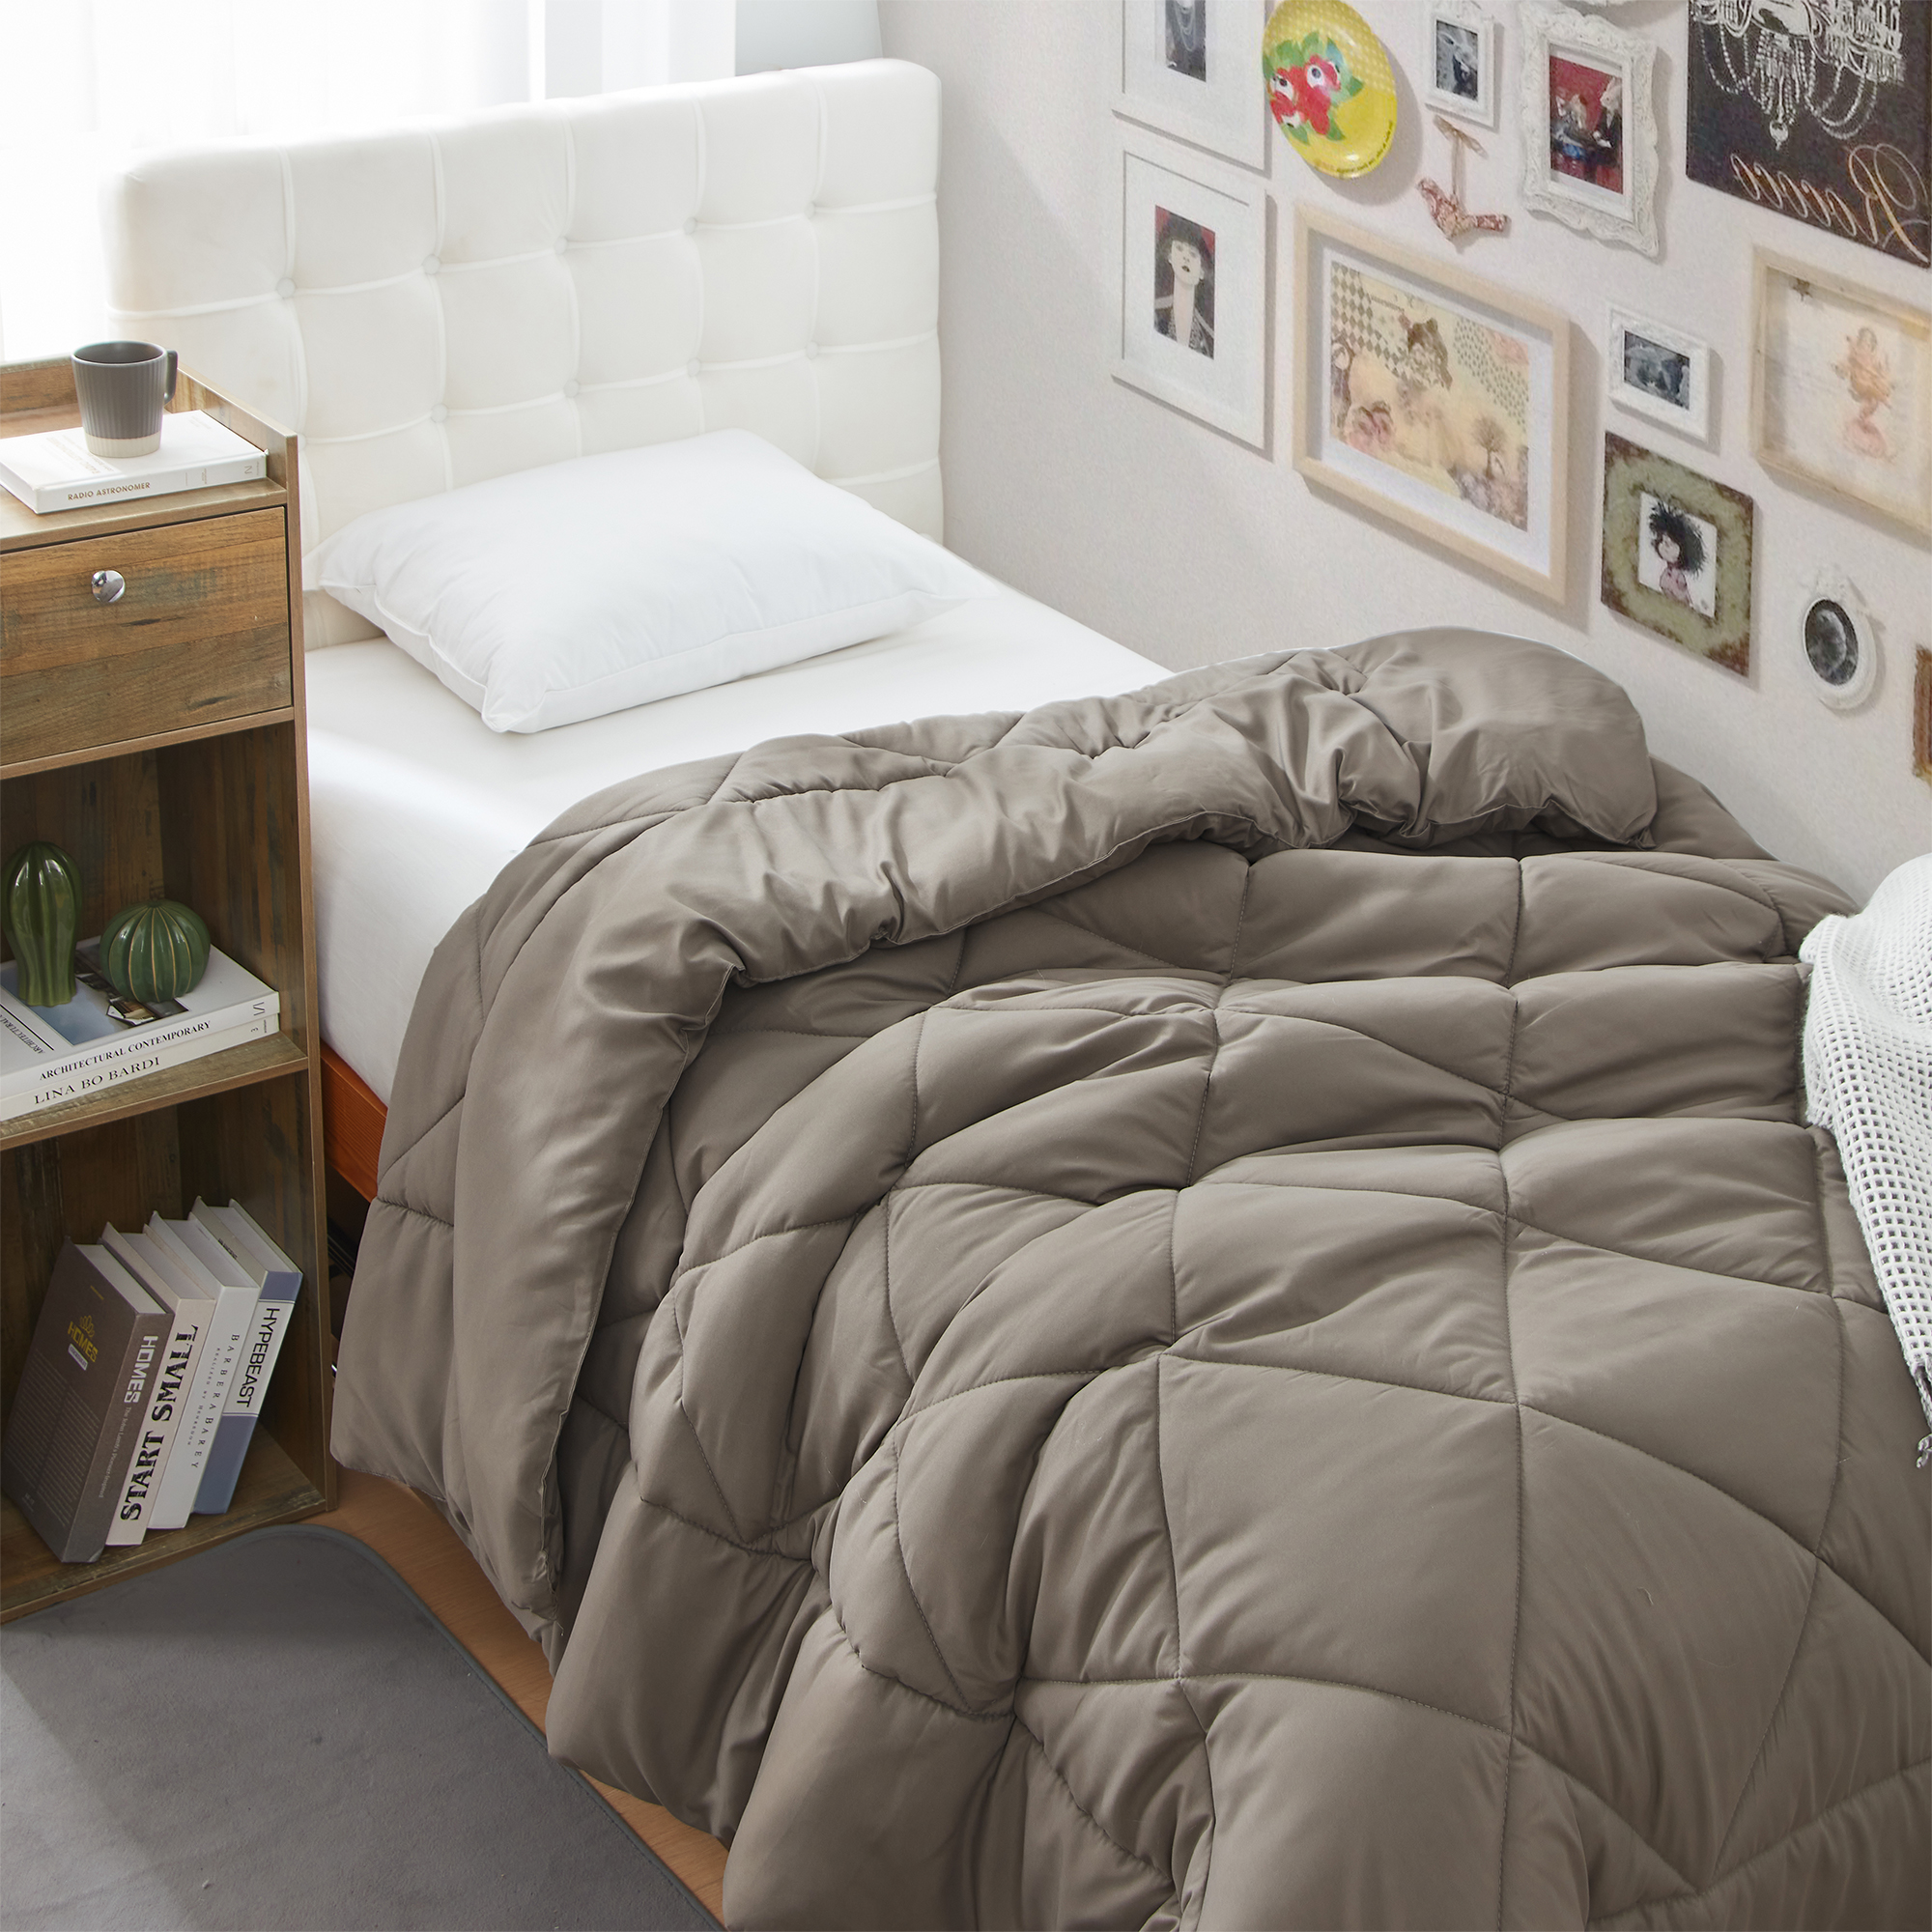 Solid Dark Brown Twin Comforter - Oversized Twin XL Bedding